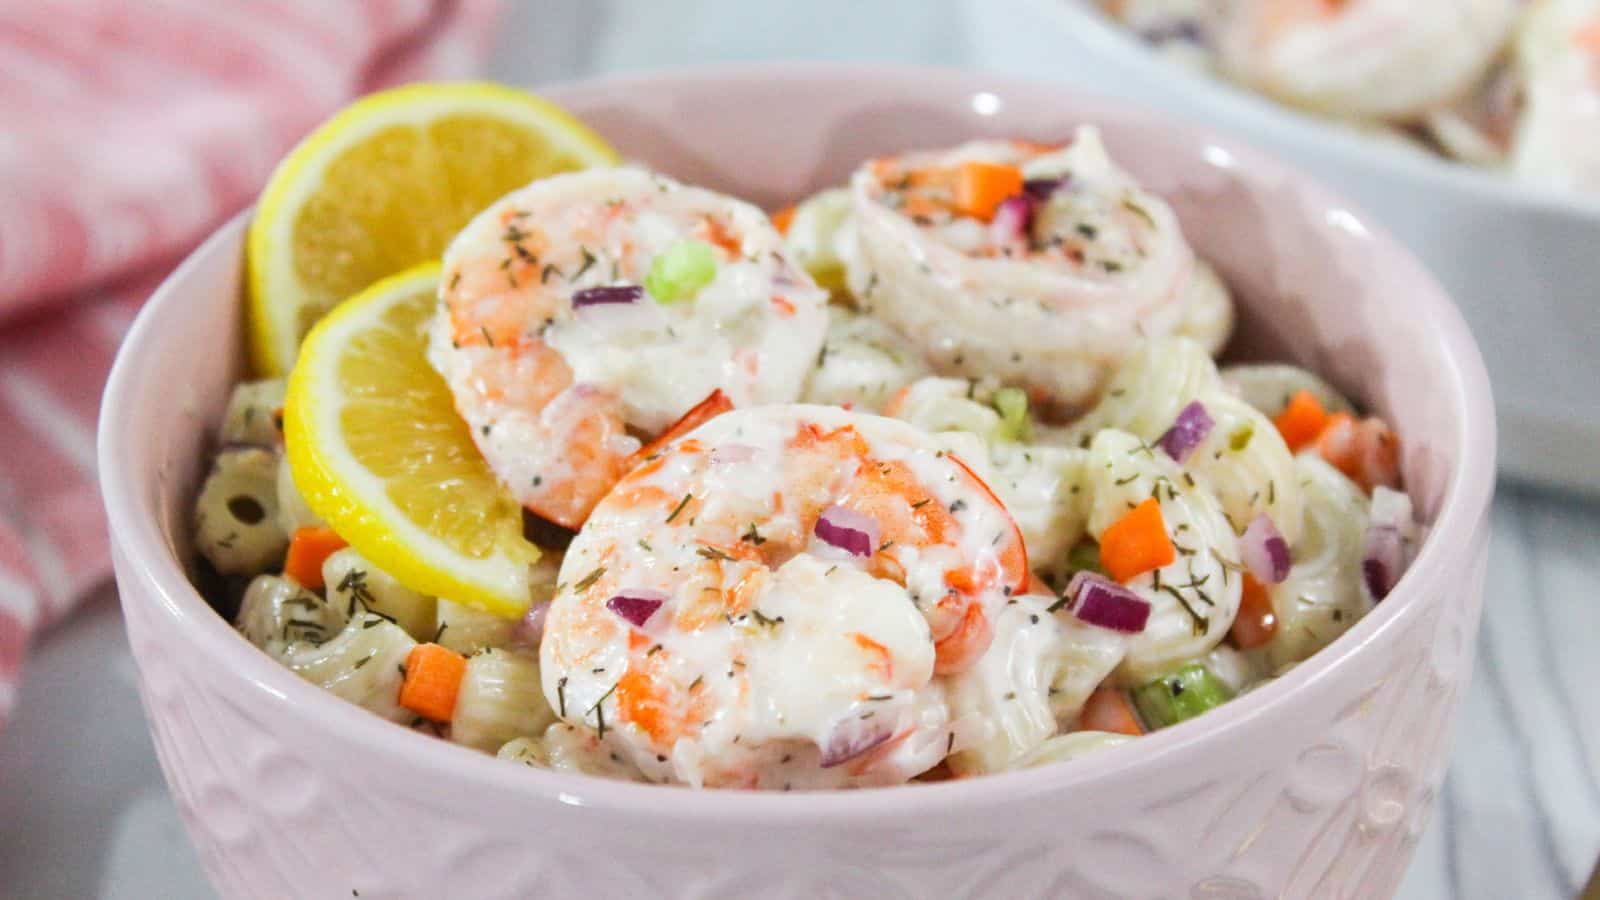 Shrimp macaroni salad in a pink bowl with lemon wedges.